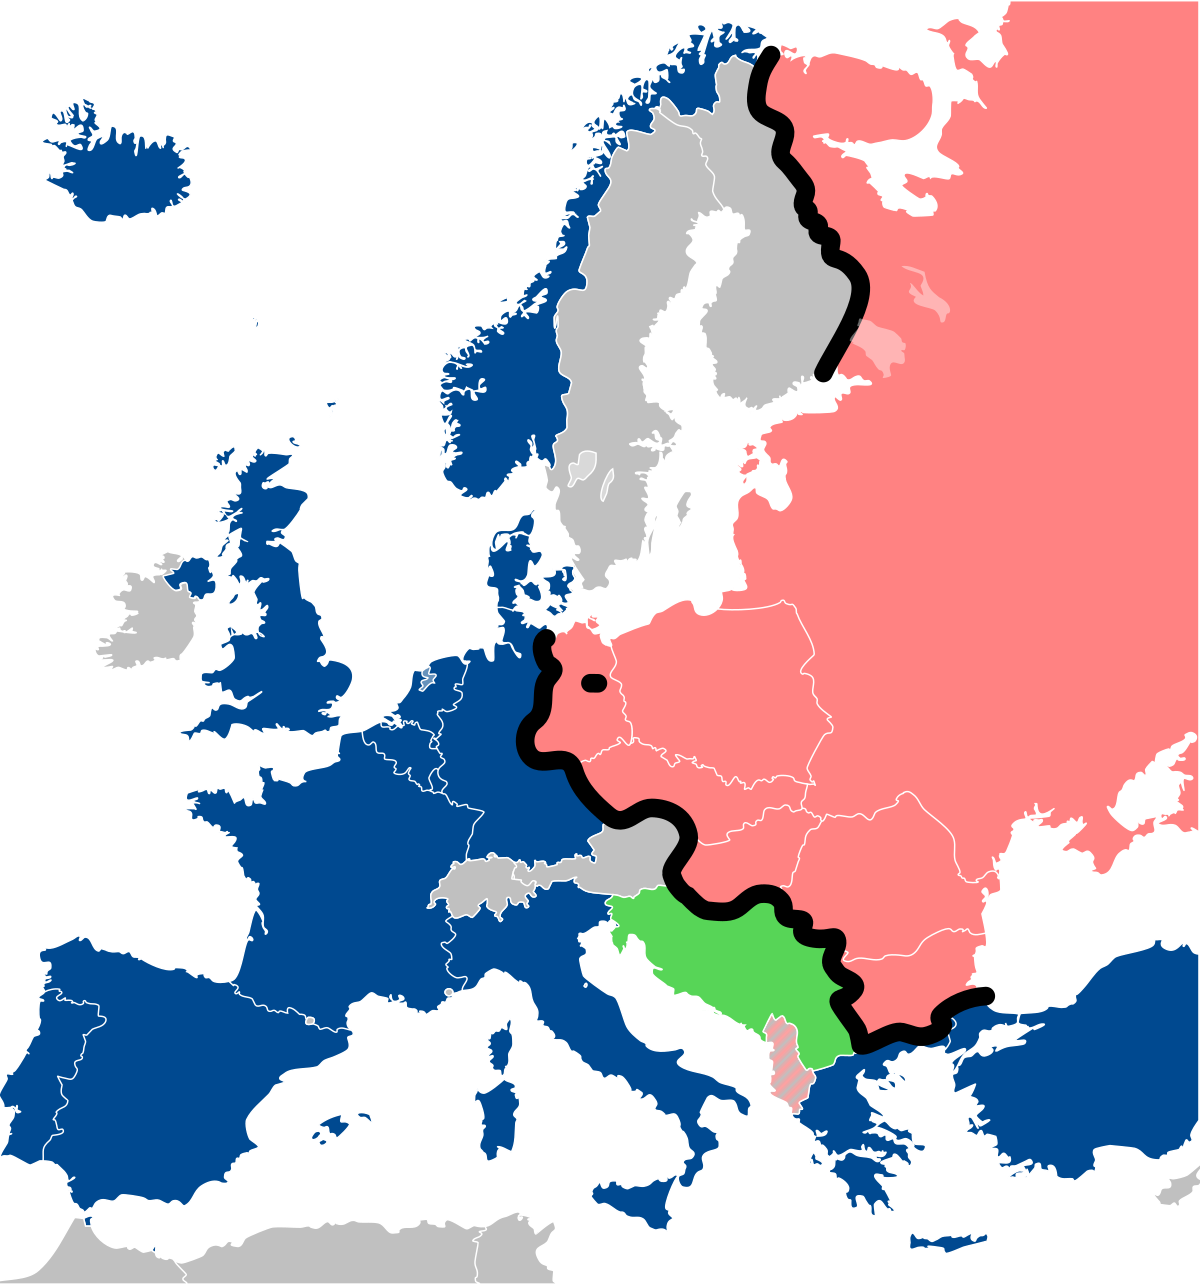 Iron Curtain Wikipedia